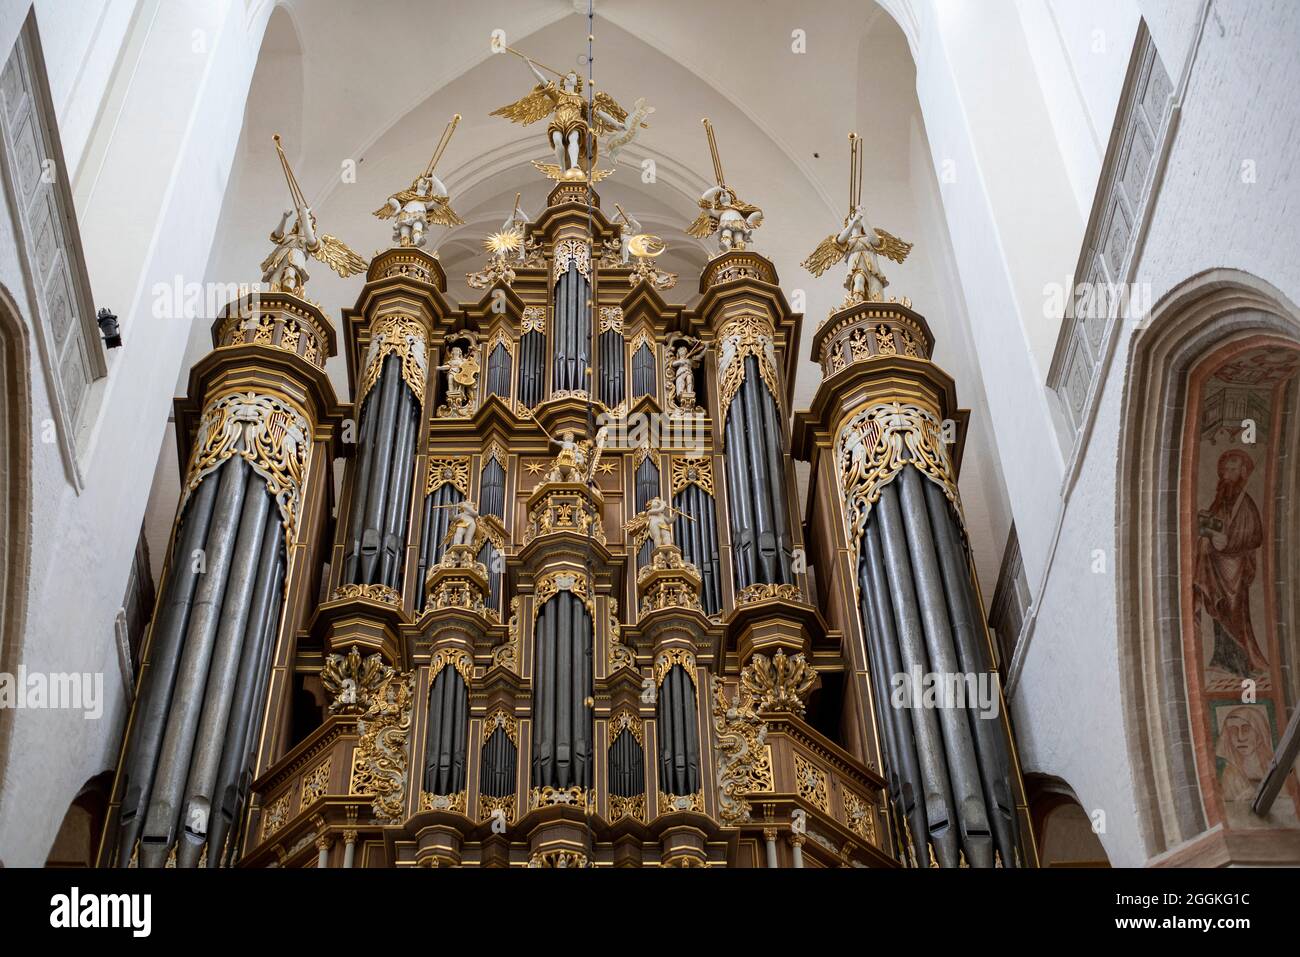 Germany, Mecklenburg-Western Pomerania, Stralsund, organ in the Marienkirche in the Hanseatic city of Stralsund, Baltic Sea Stock Photo